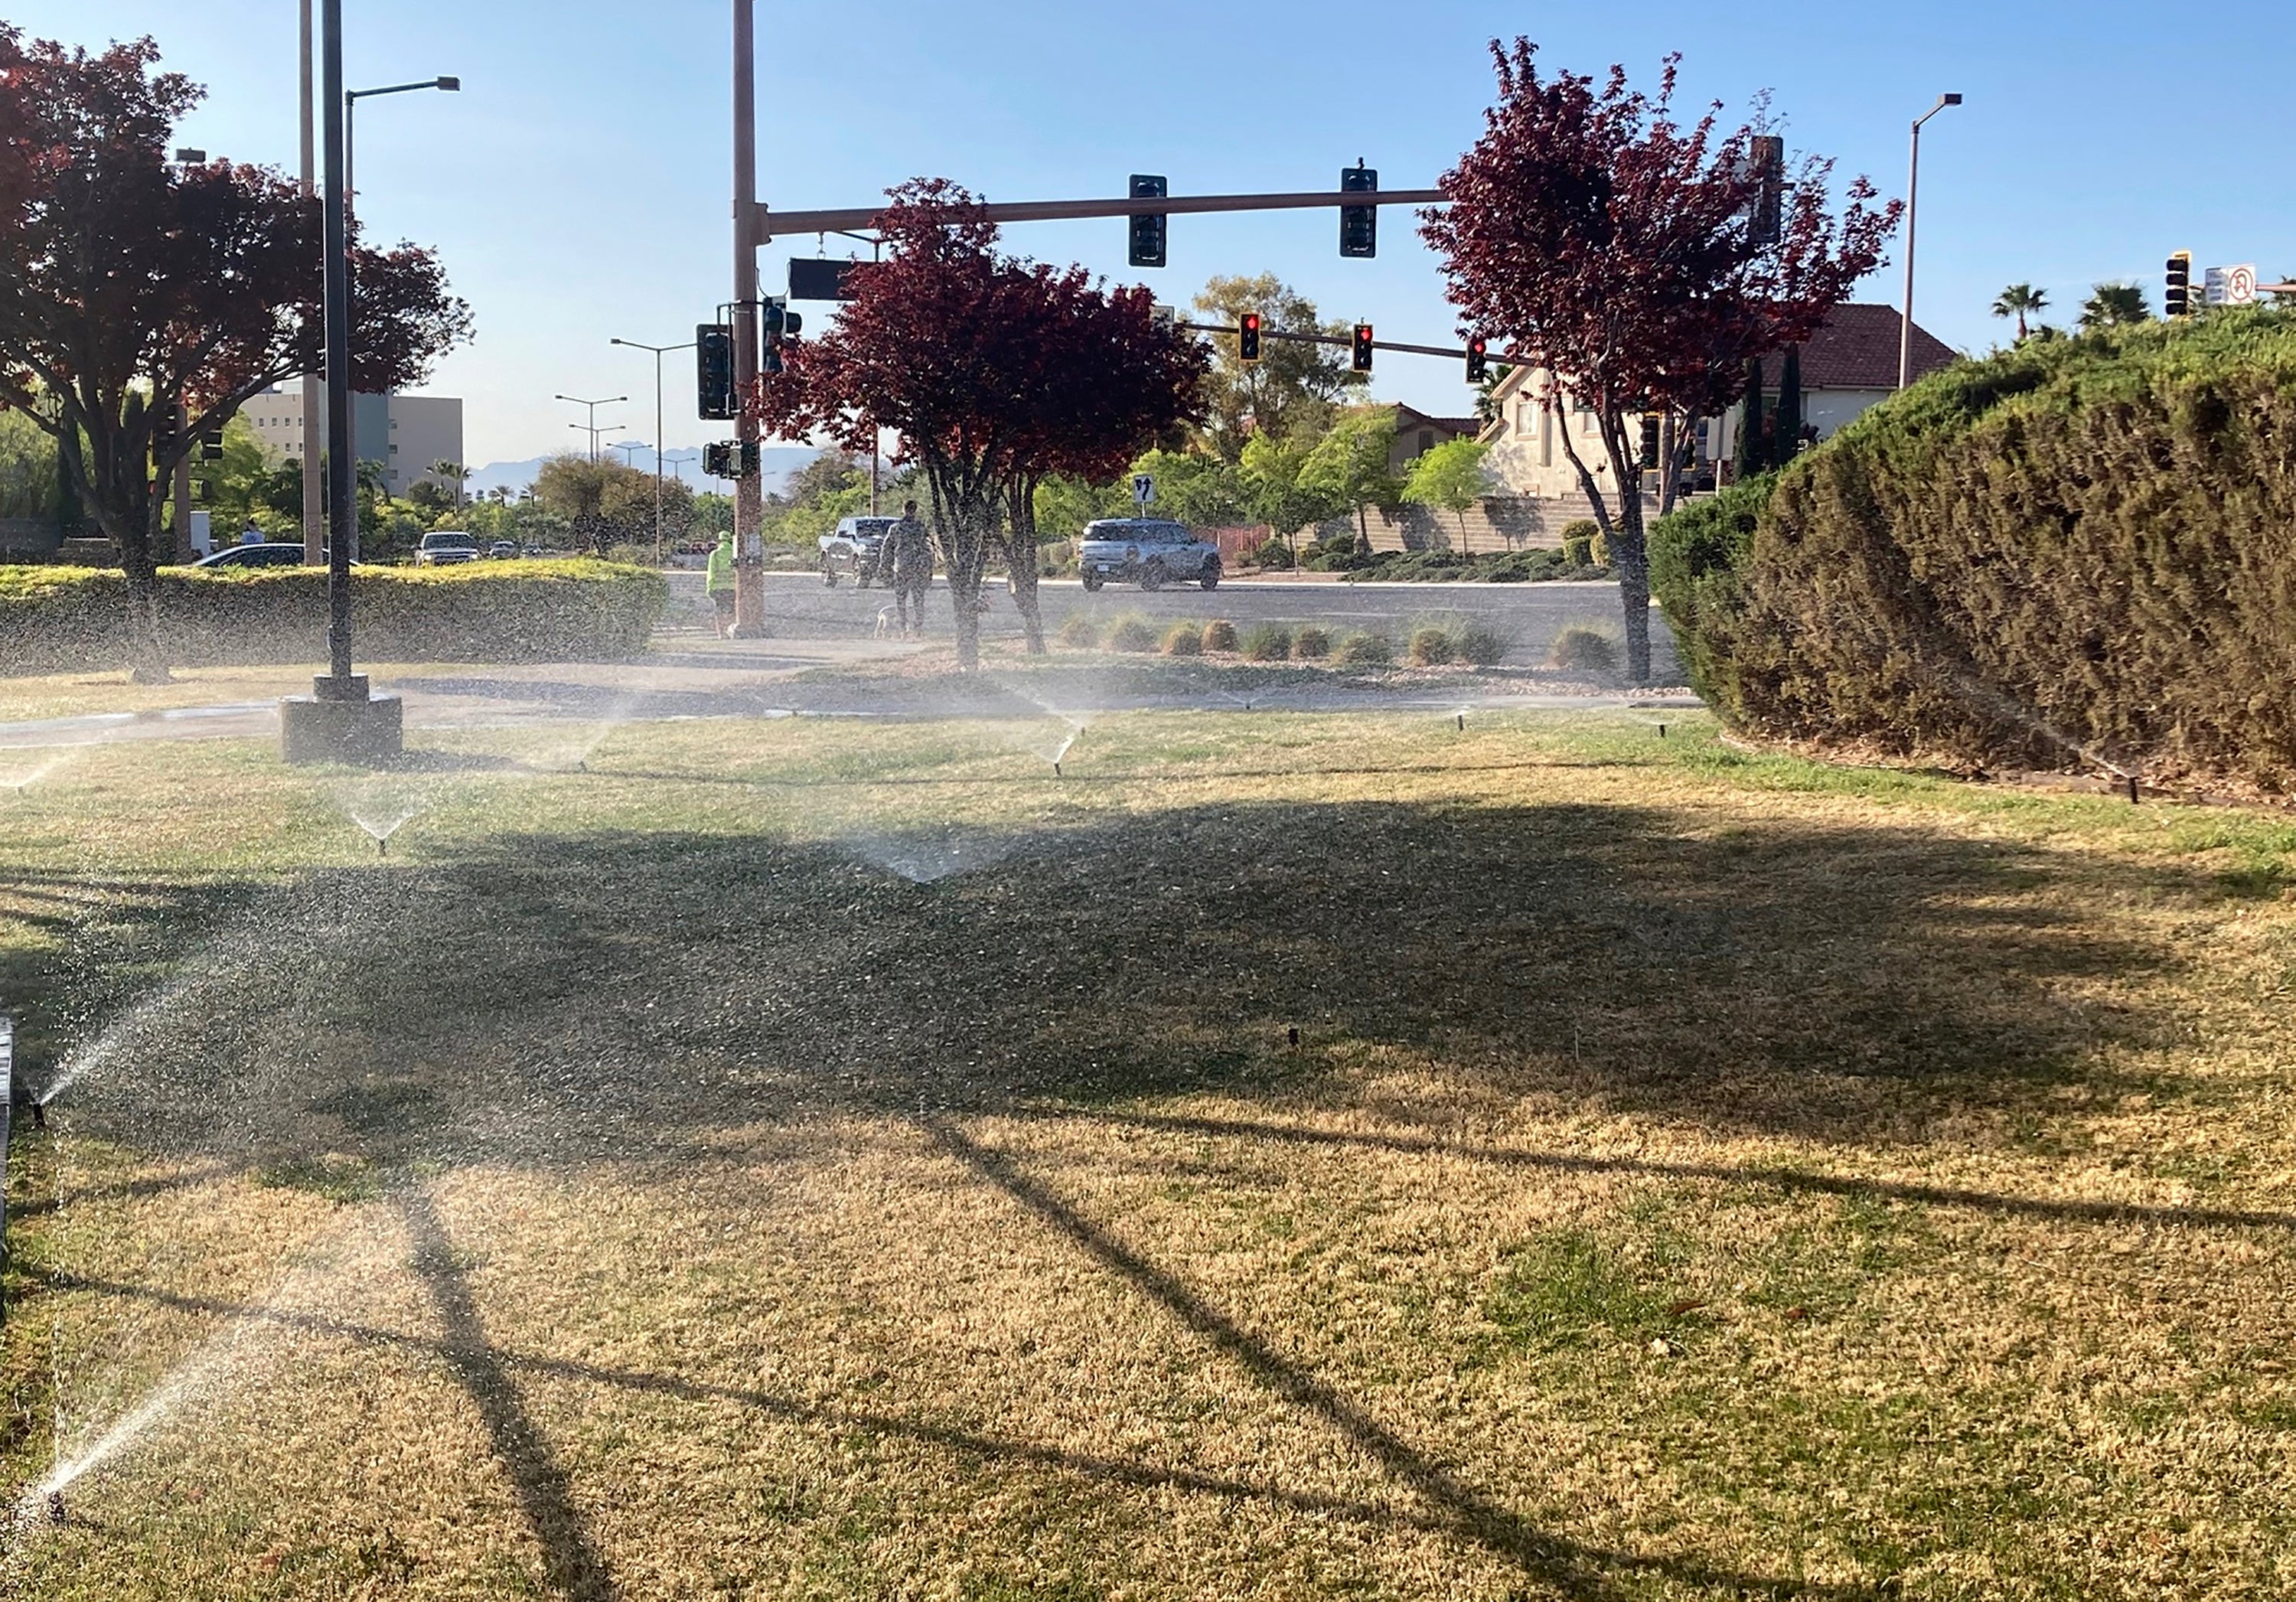 Sprinklers water grass near a street corner on 9 April, 2021, in the Summerlin neighborhood of Las Vegas